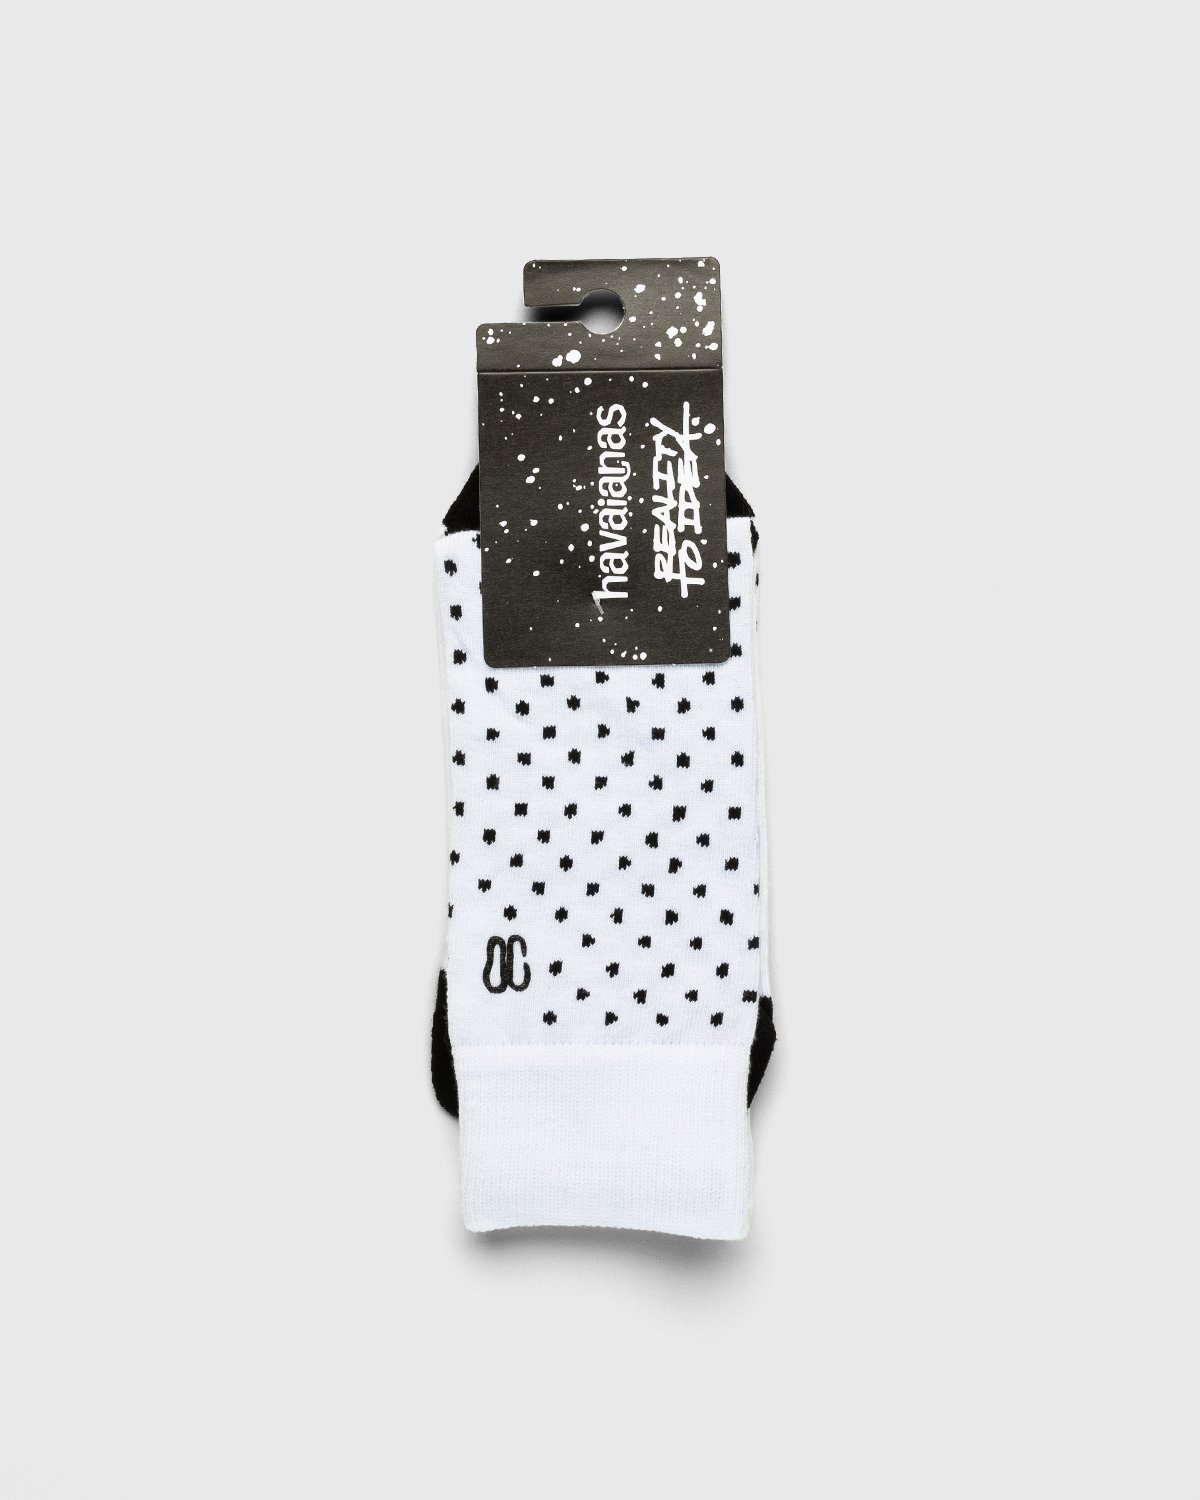 havaianas - Reality to Idea by Joshuas Vides Split-Toe Socks White - Accessories - White - Image 2